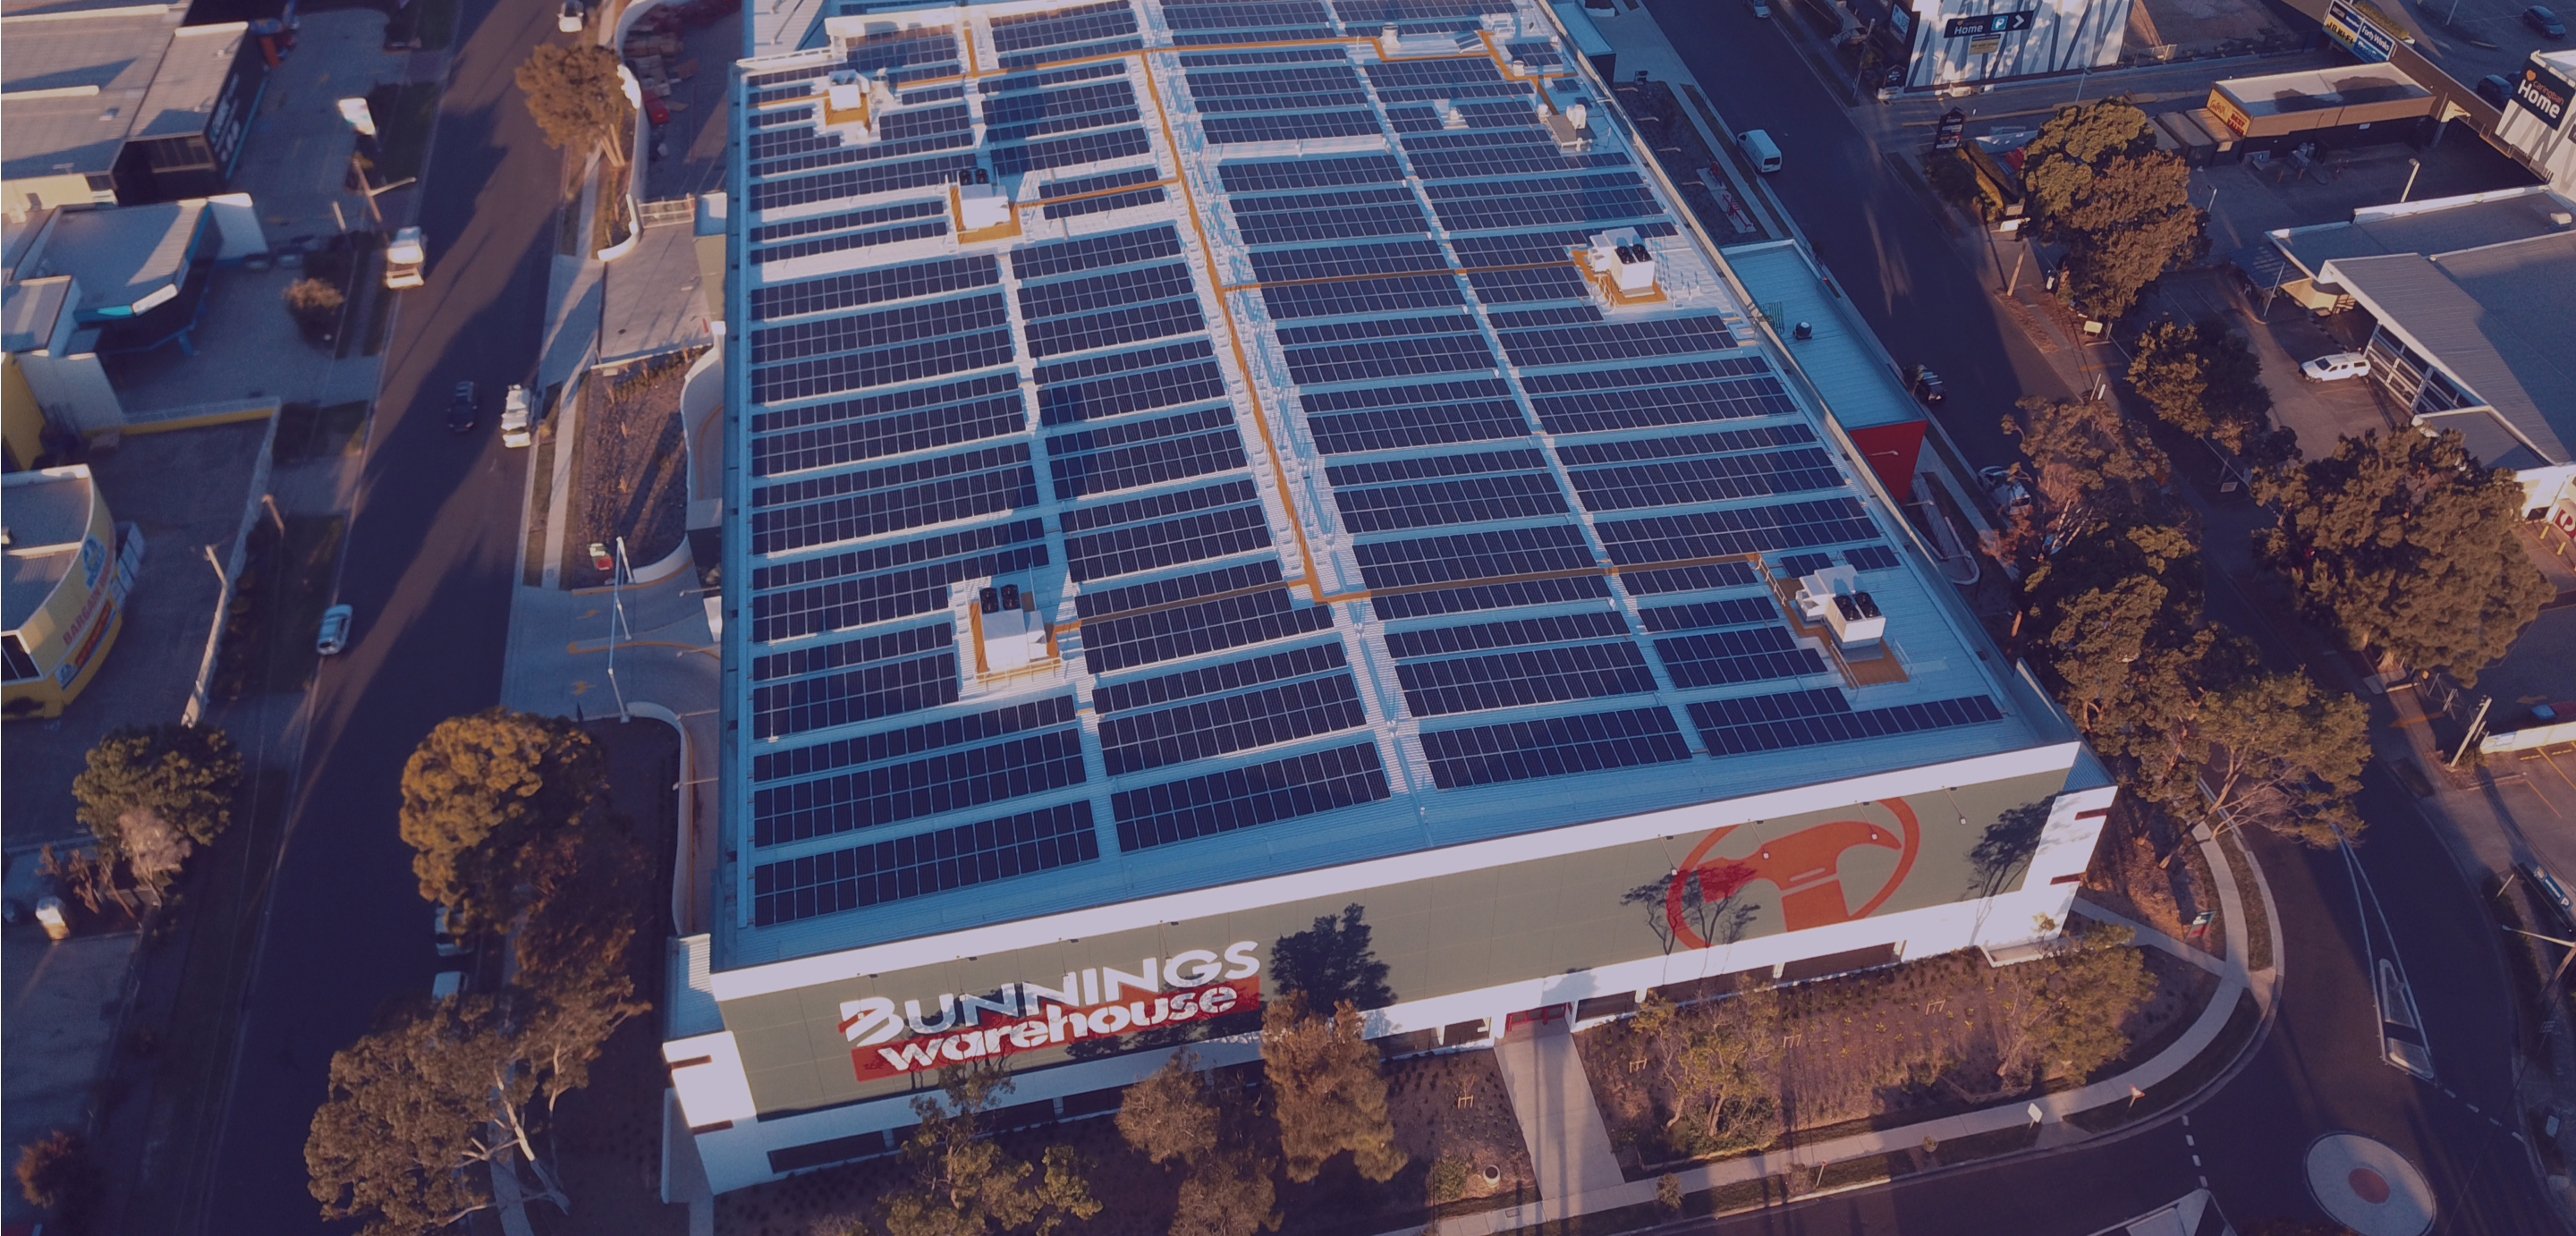 Bunnings Warehouse rooftop solar installation